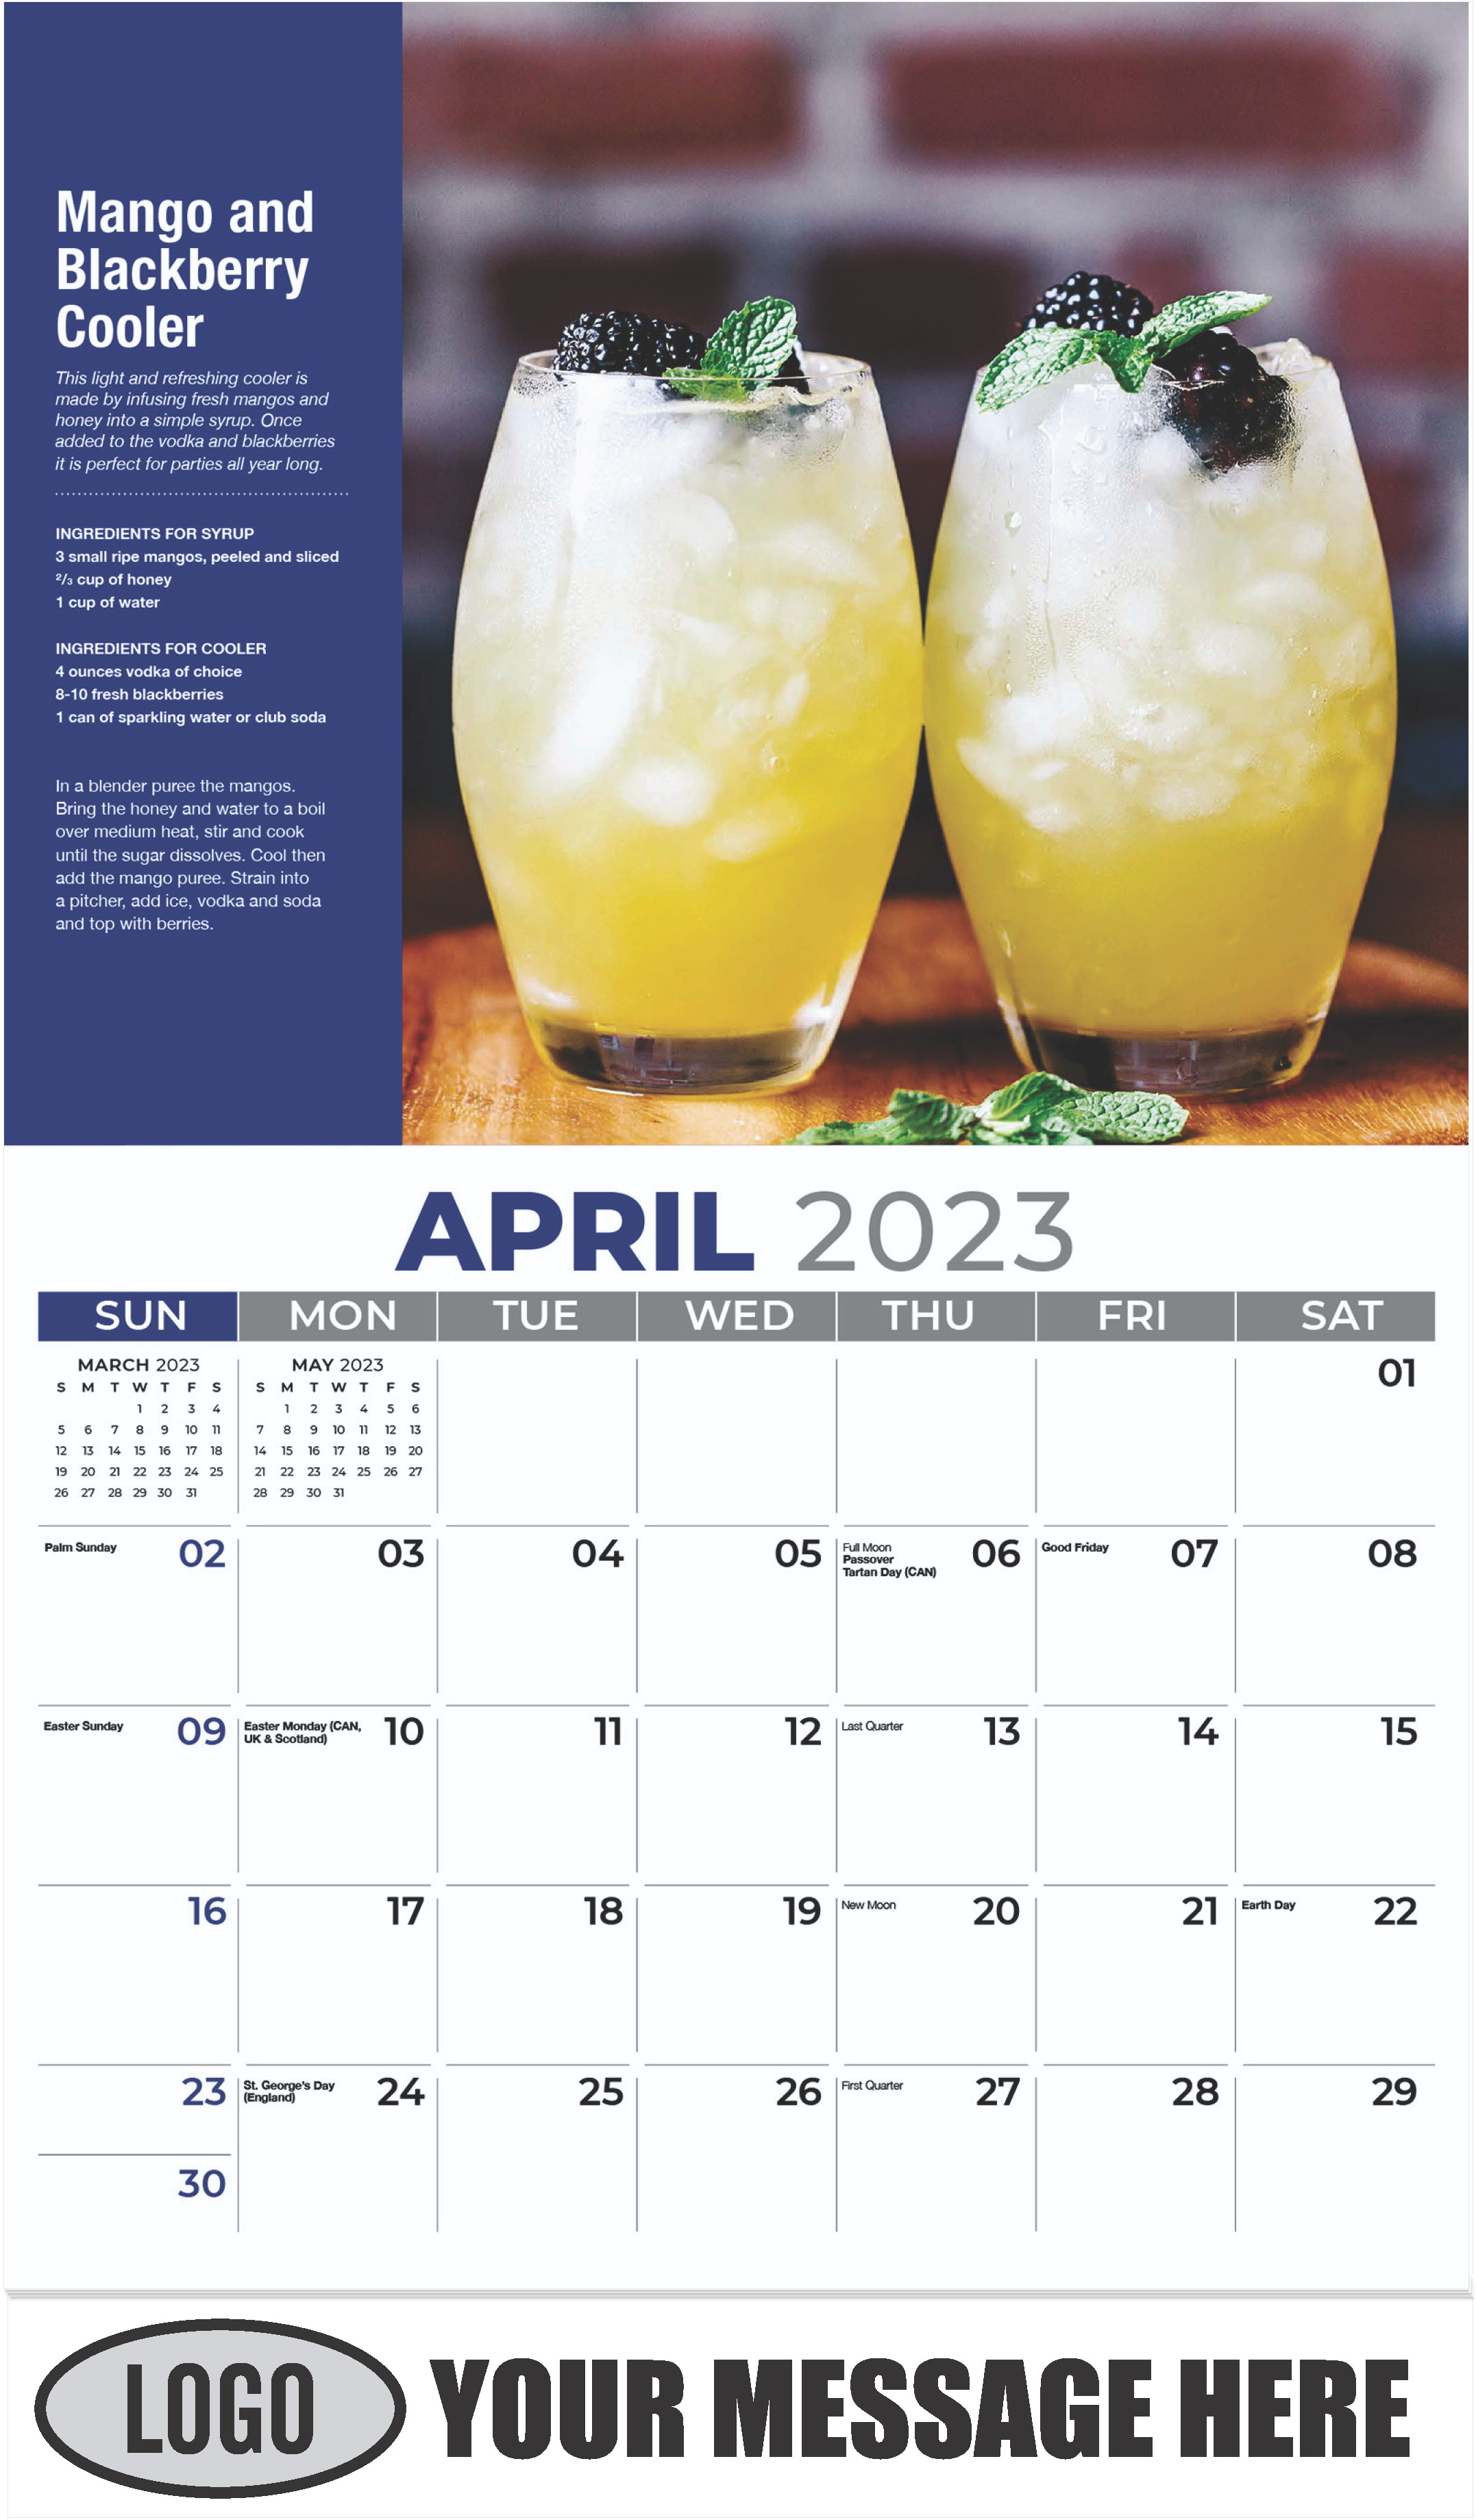 Mango and Blackberry Cooler - April - Happy Hour Cocktails 2023 Promotional Calendar